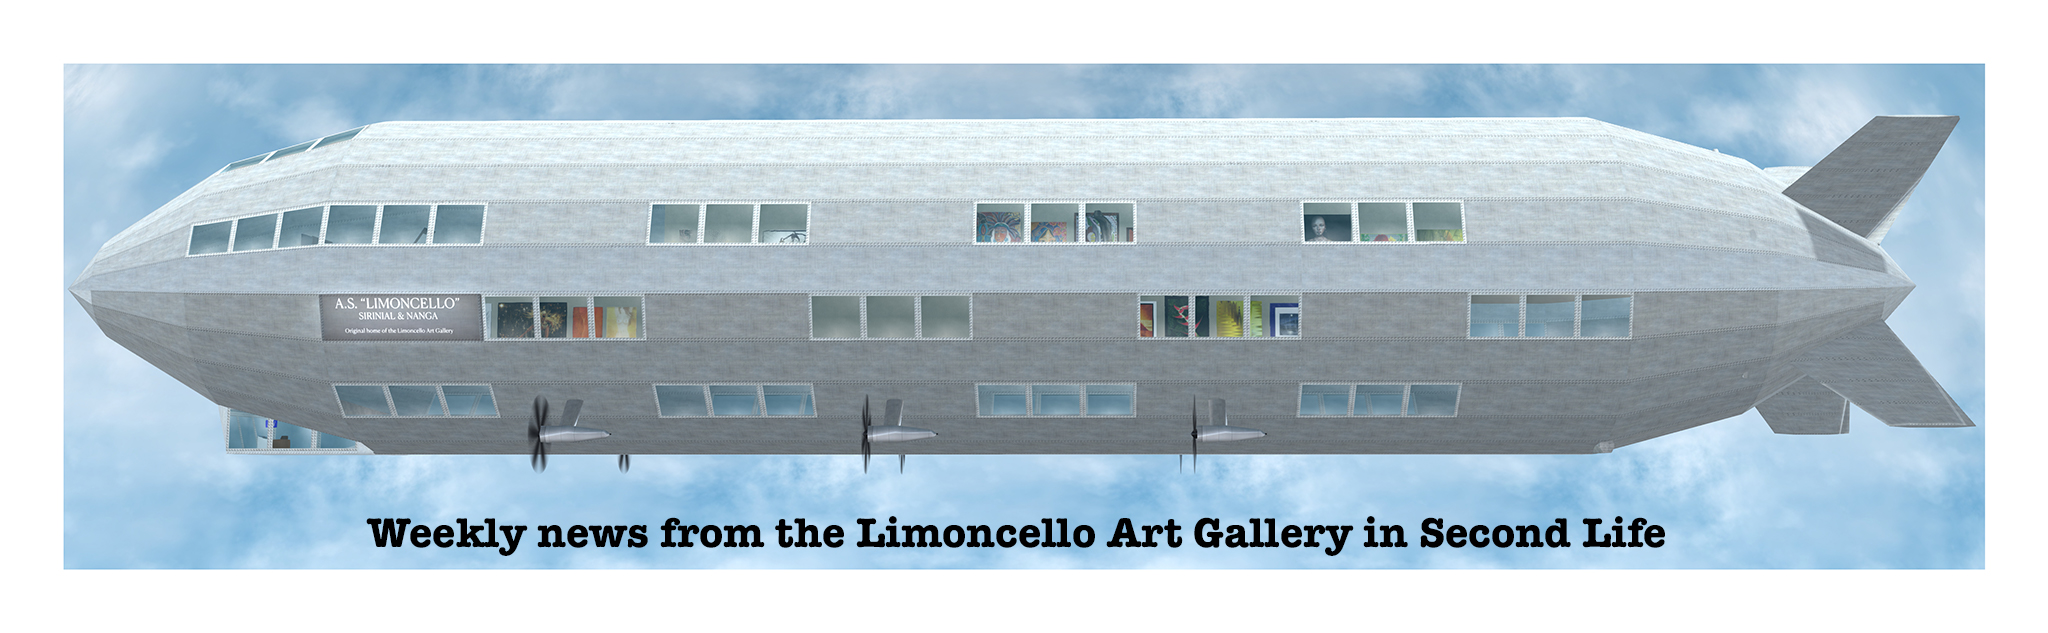 Limoncello Gallery News